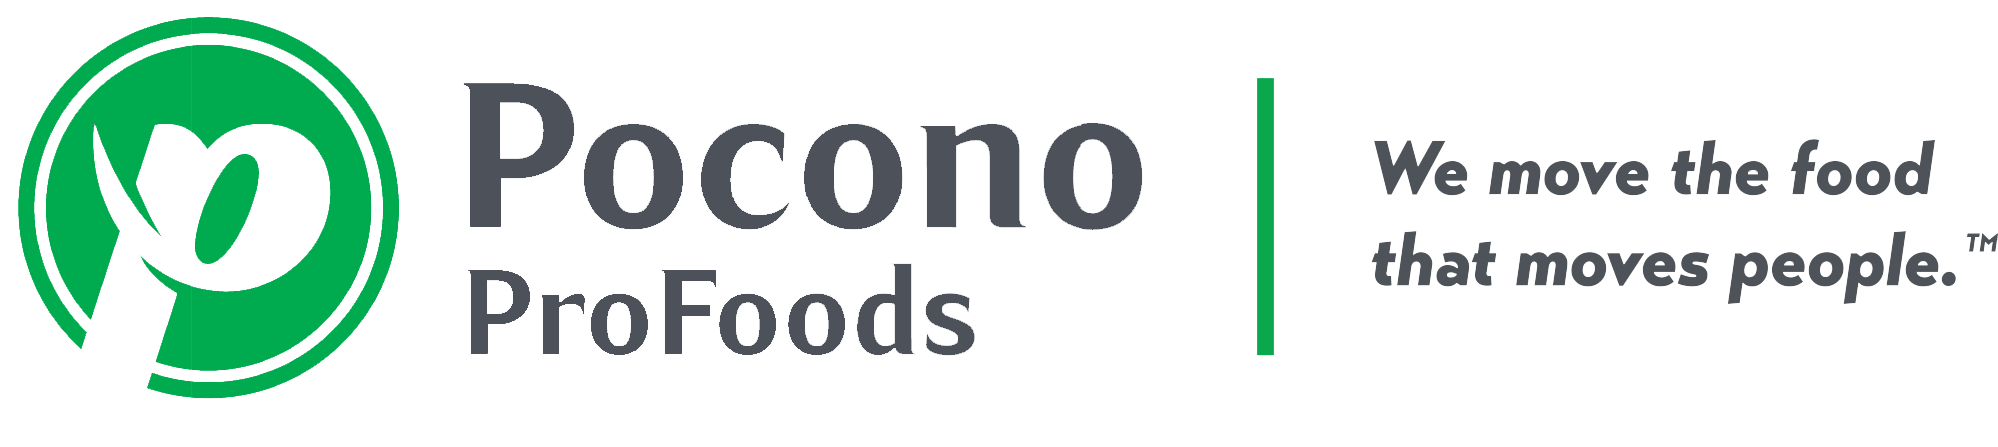 Catalog Logo - Product Catalog | Pocono ProFoods